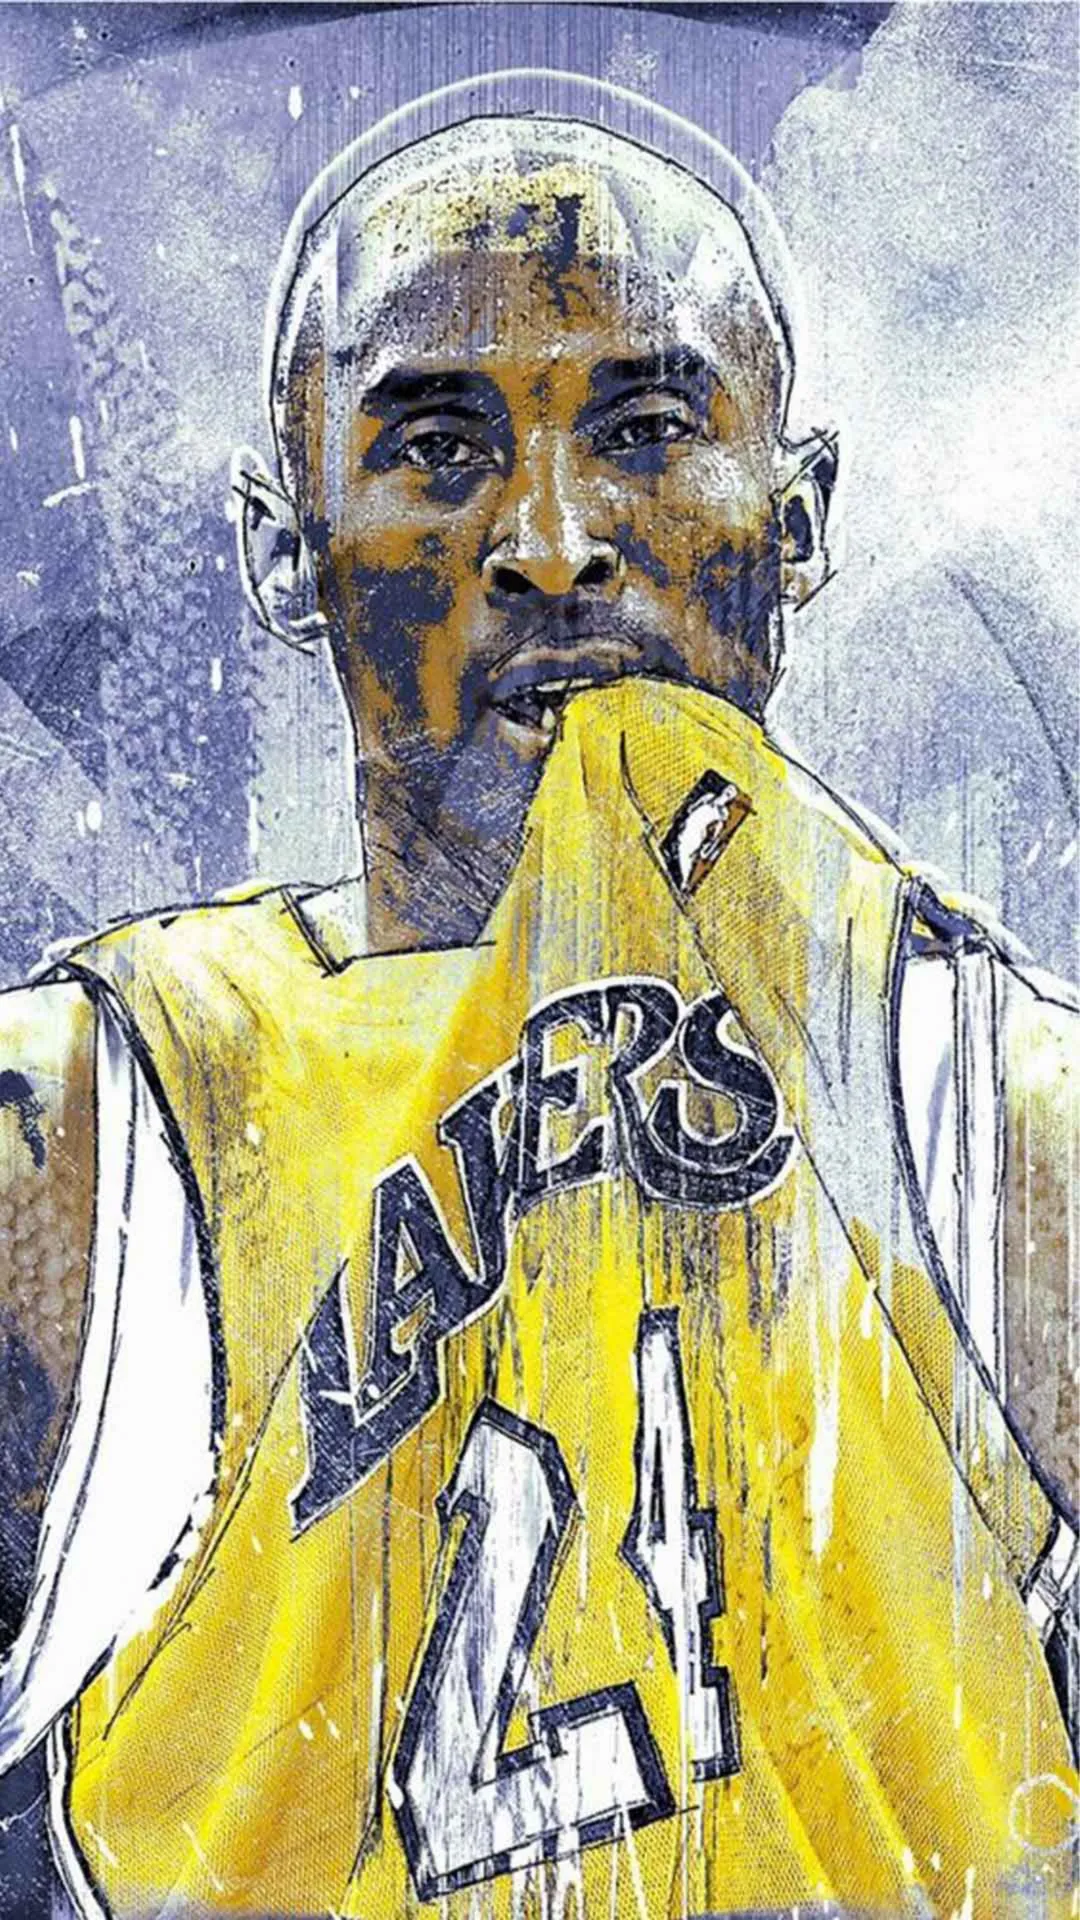 thumb for Kobe Bryant Image Wallpaper